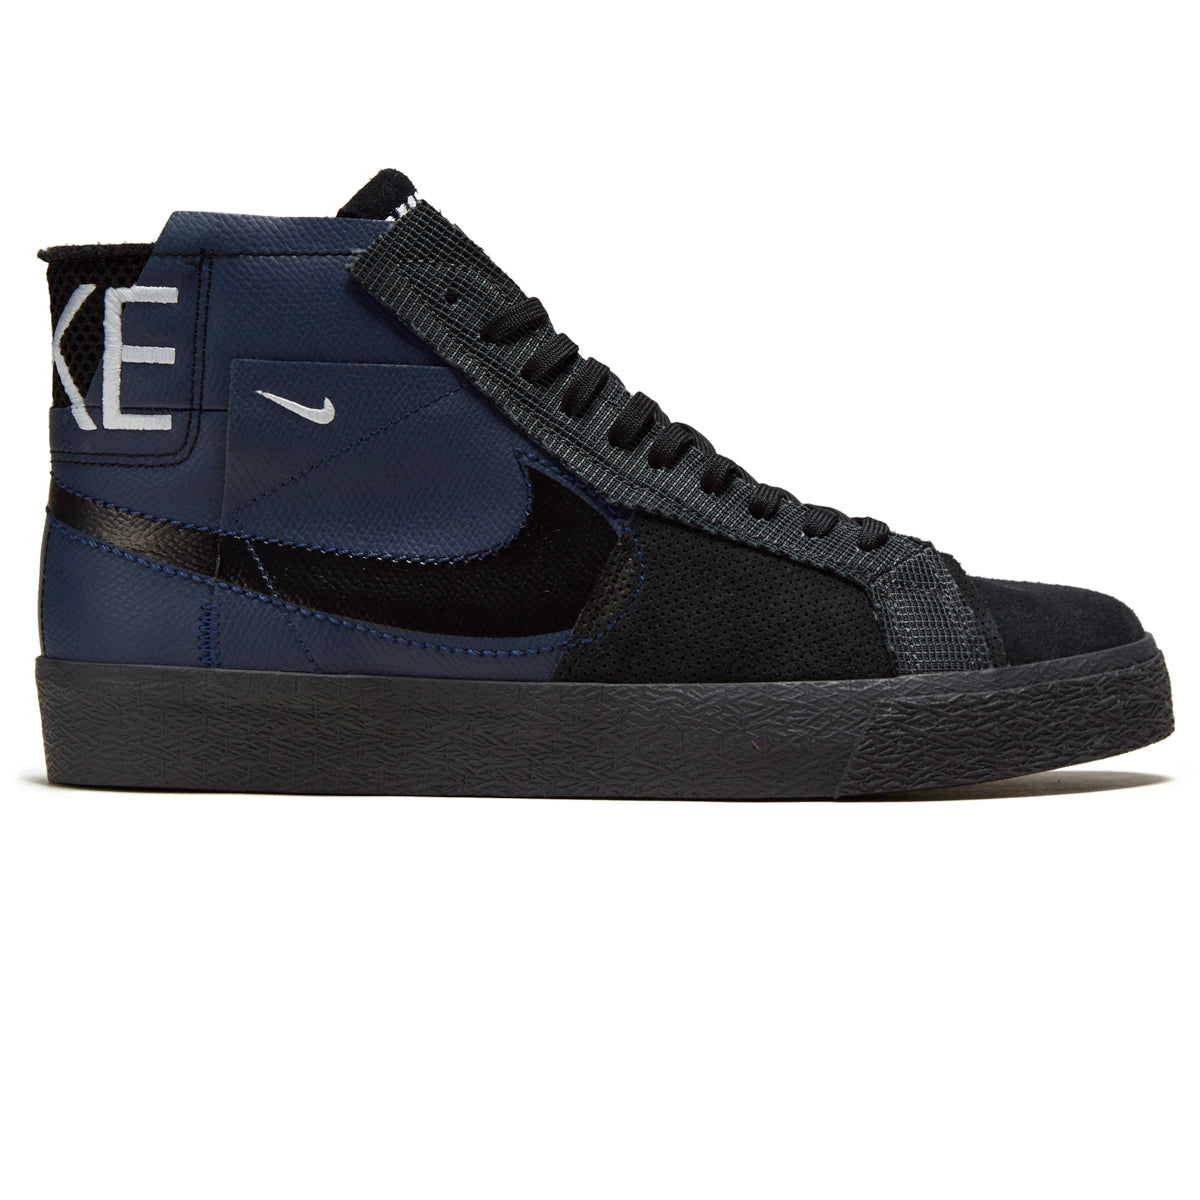 Nike SB Zoom Blazer Mid Premium Shoes - Midnight Navy/Black/Football Grey image 1